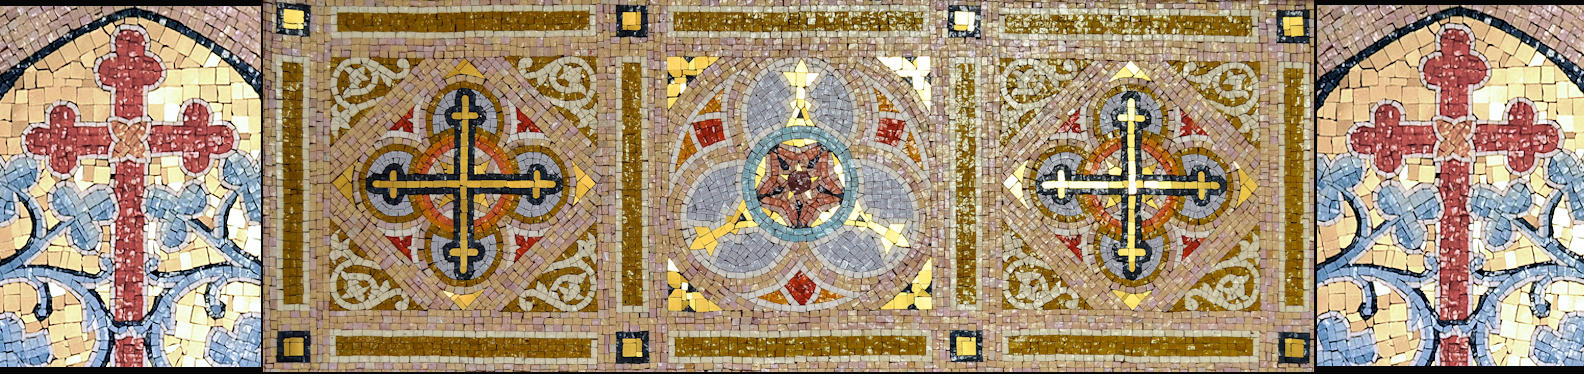 closeup photos of mosaic tile border